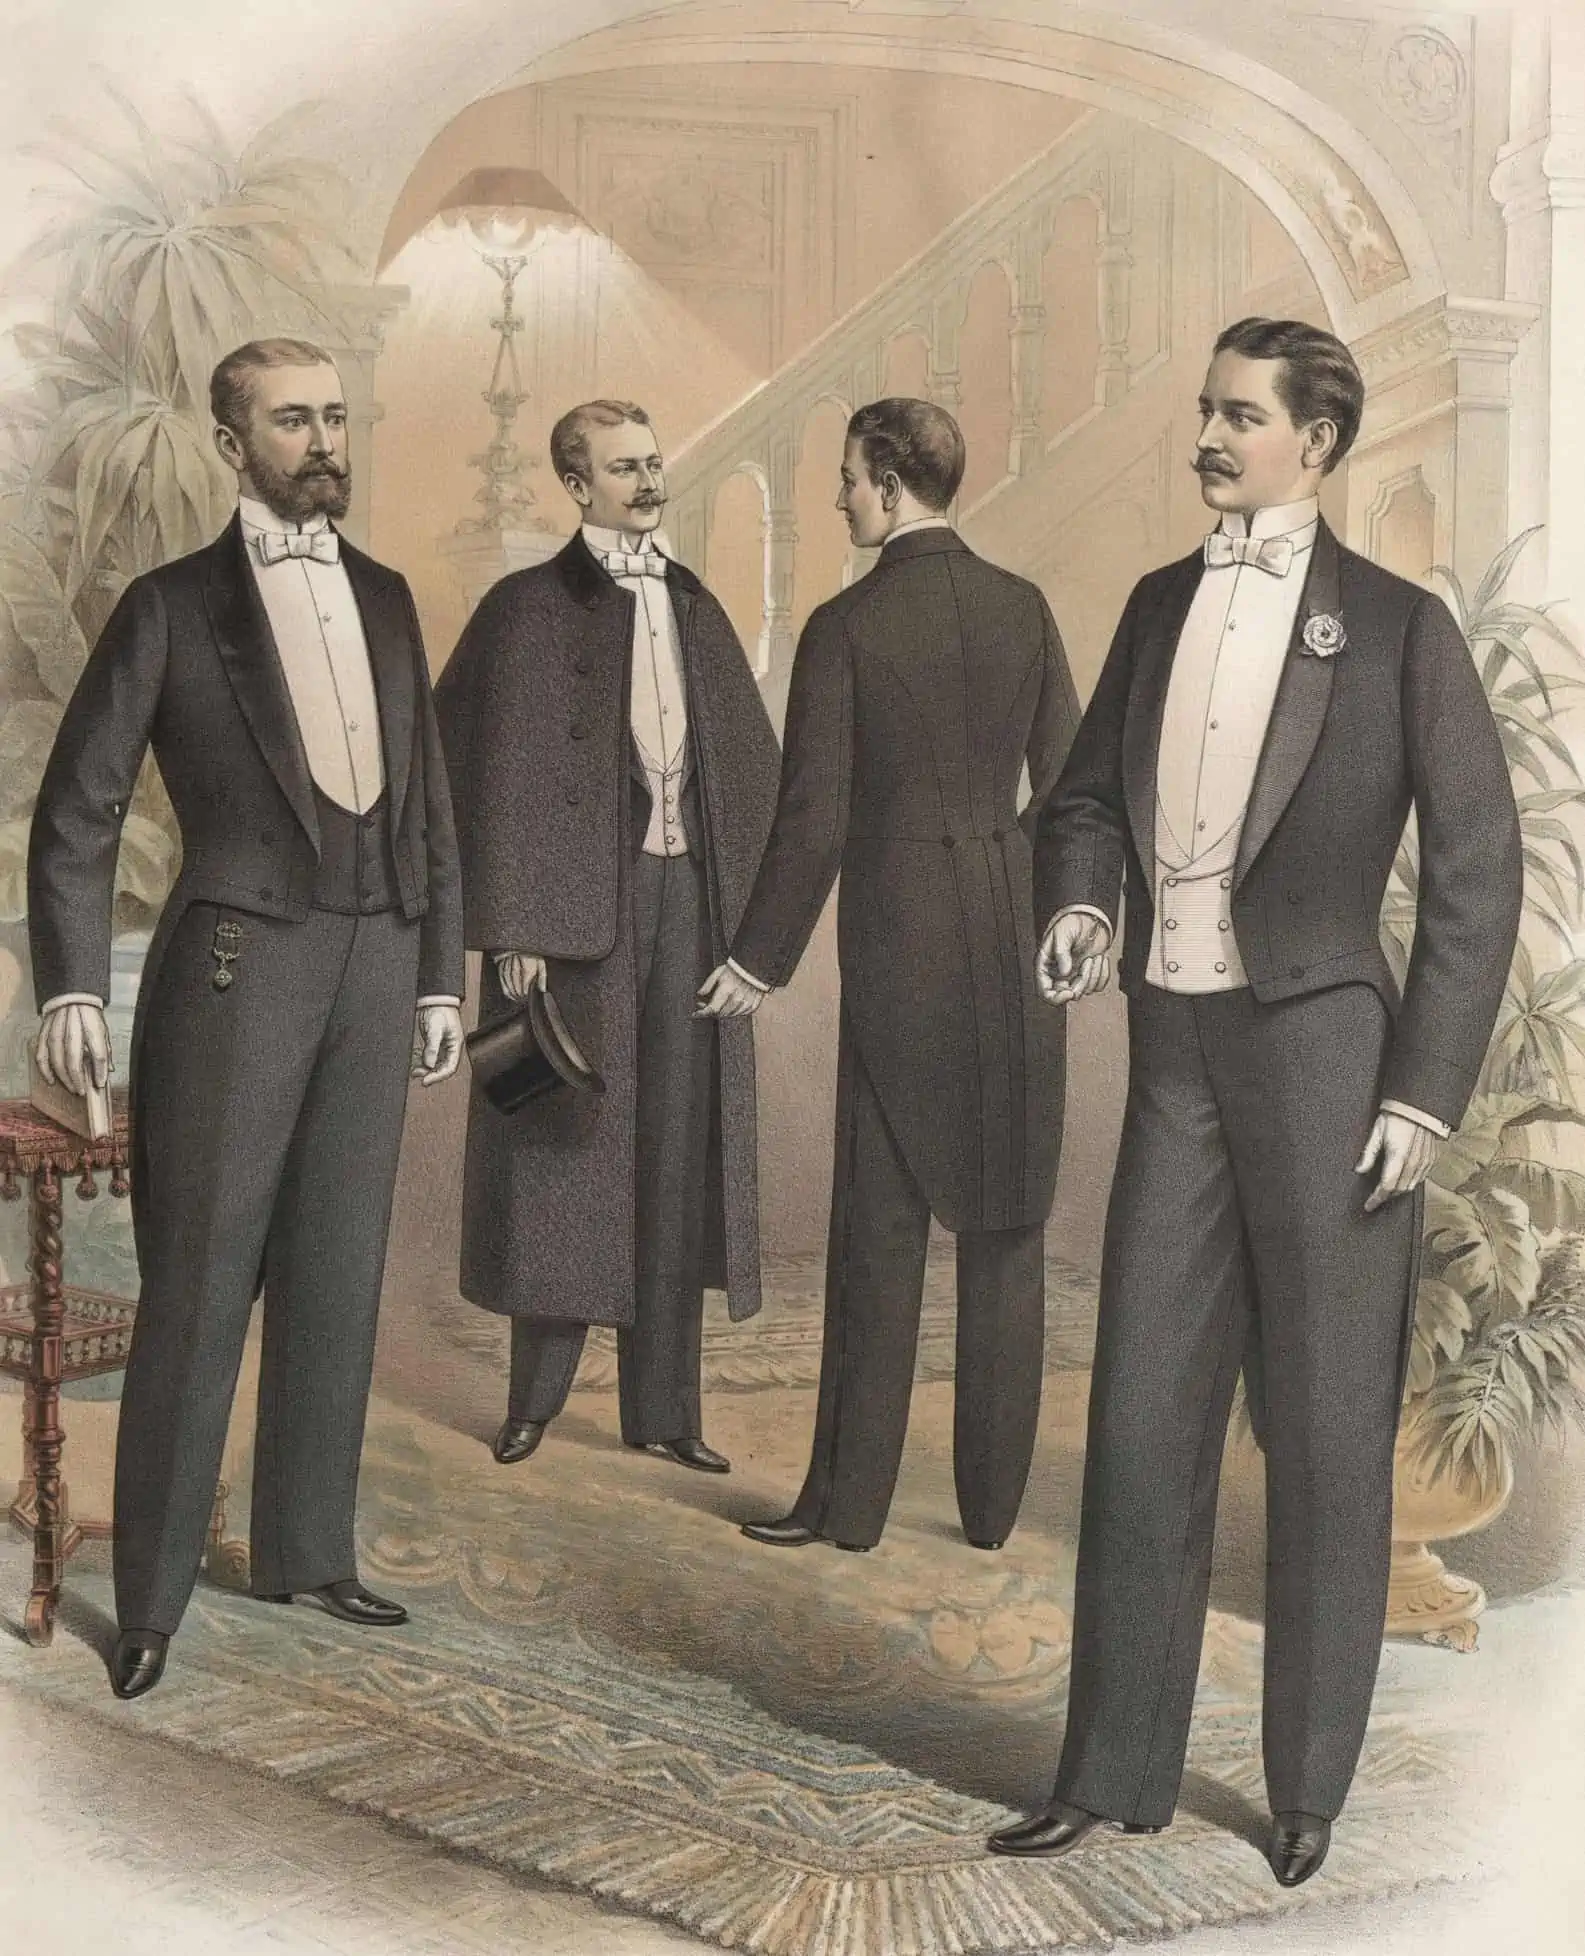 Eveningwear was very formal in the early 1900s